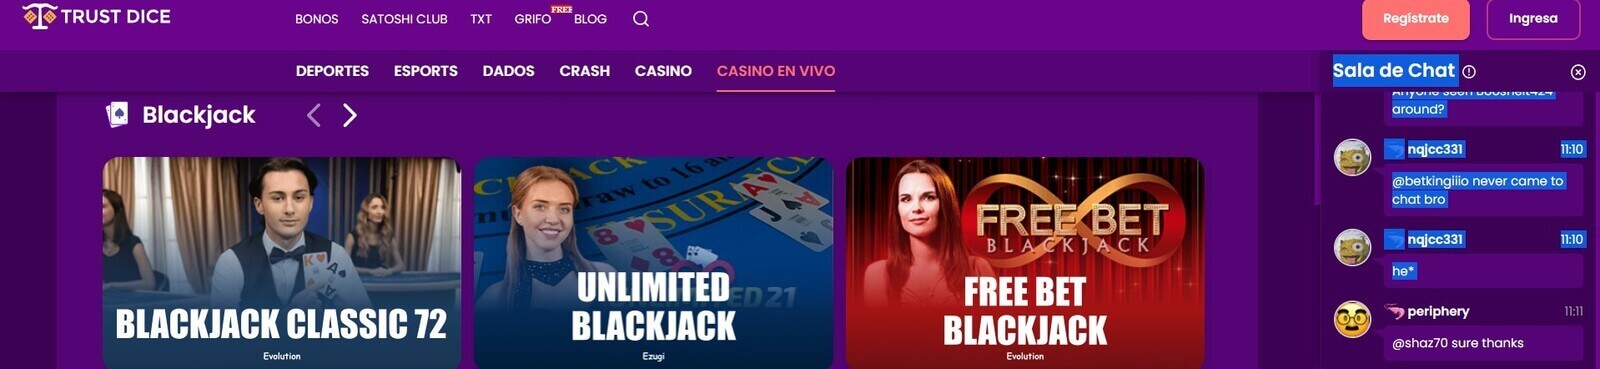 Jugar en Trust Dice Casino en vivo online